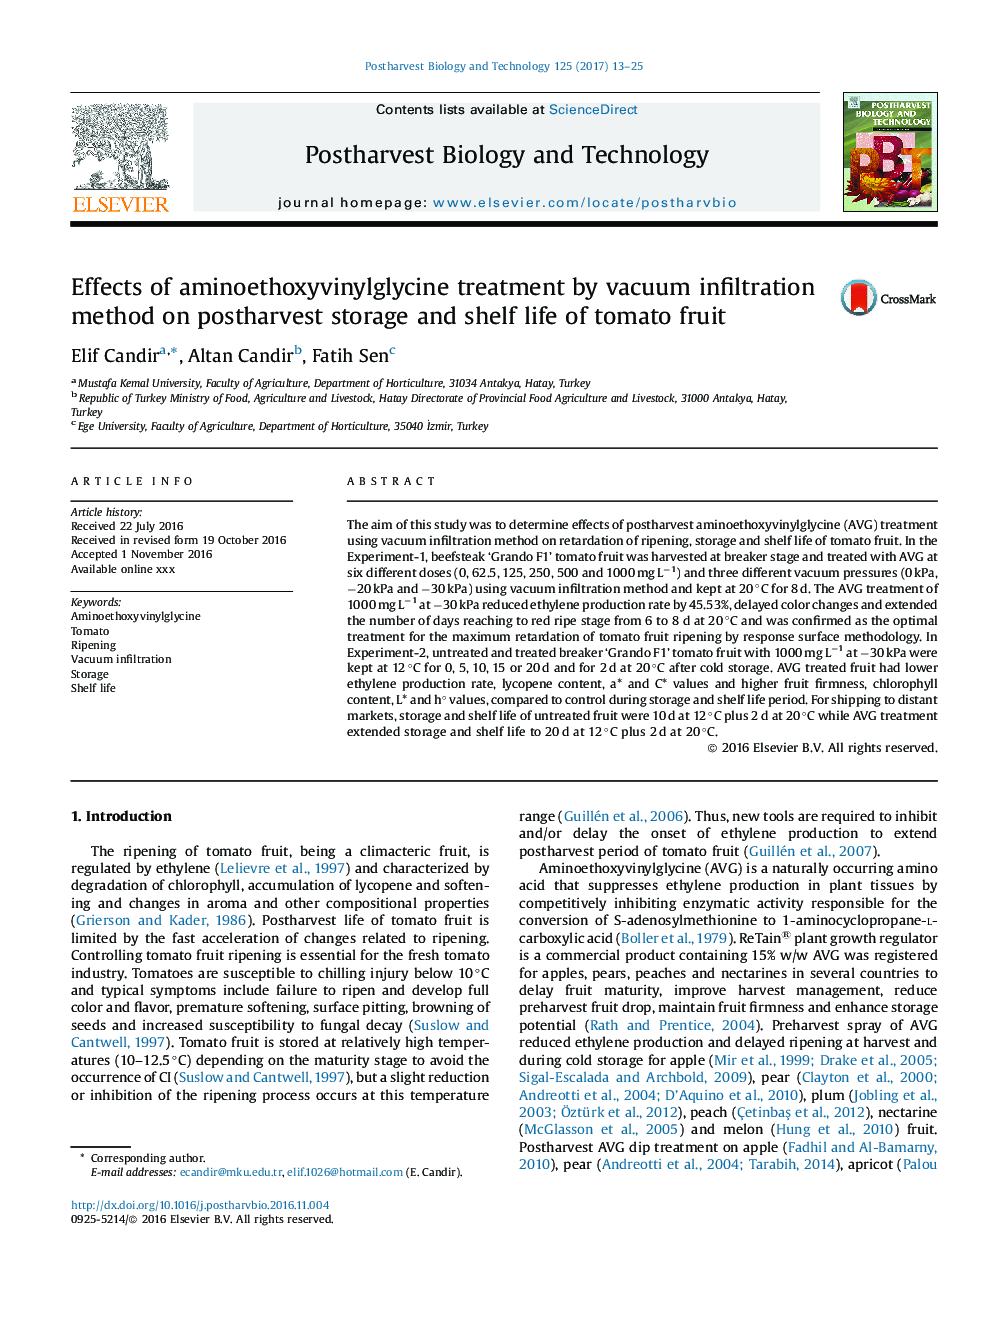 Effects of aminoethoxyvinylglycine treatment by vacuum infiltration method on postharvest storage and shelf life of tomato fruit